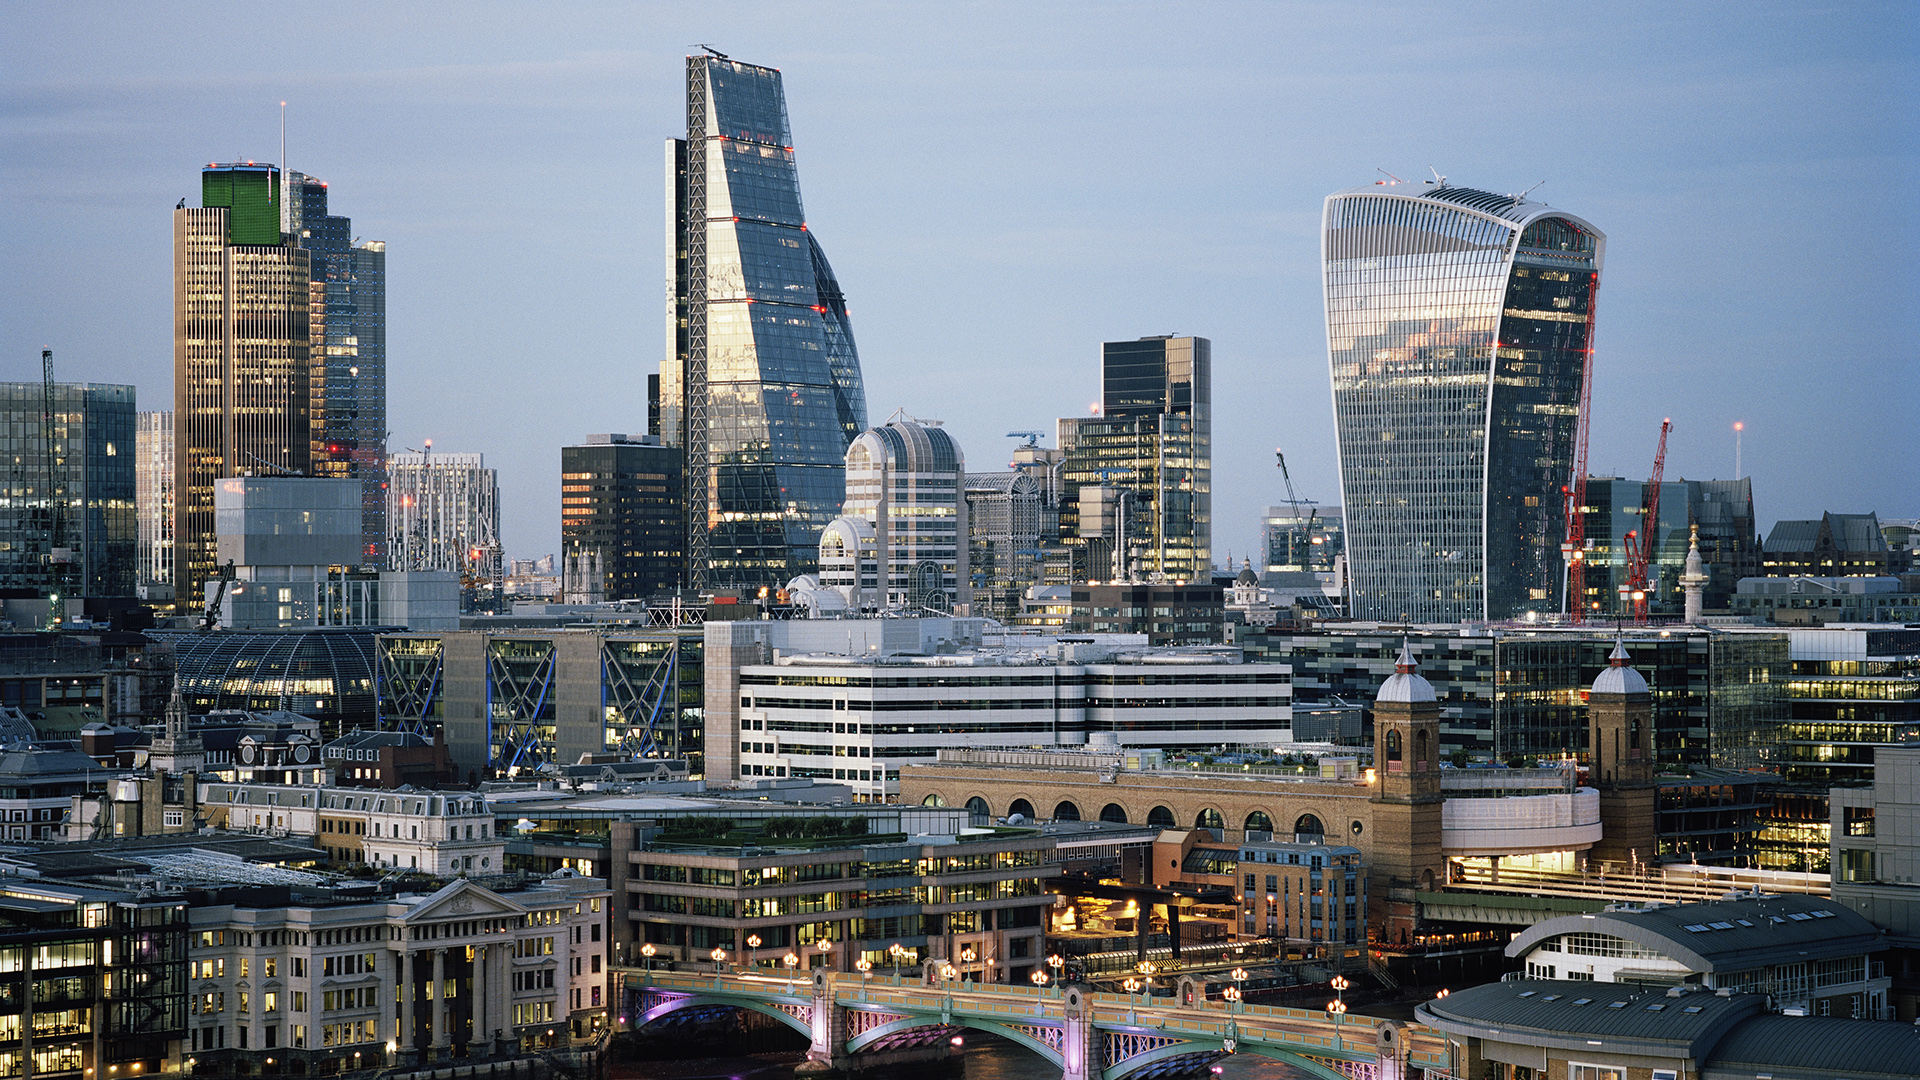 UK,London,City of London skyscrapers along River Thames